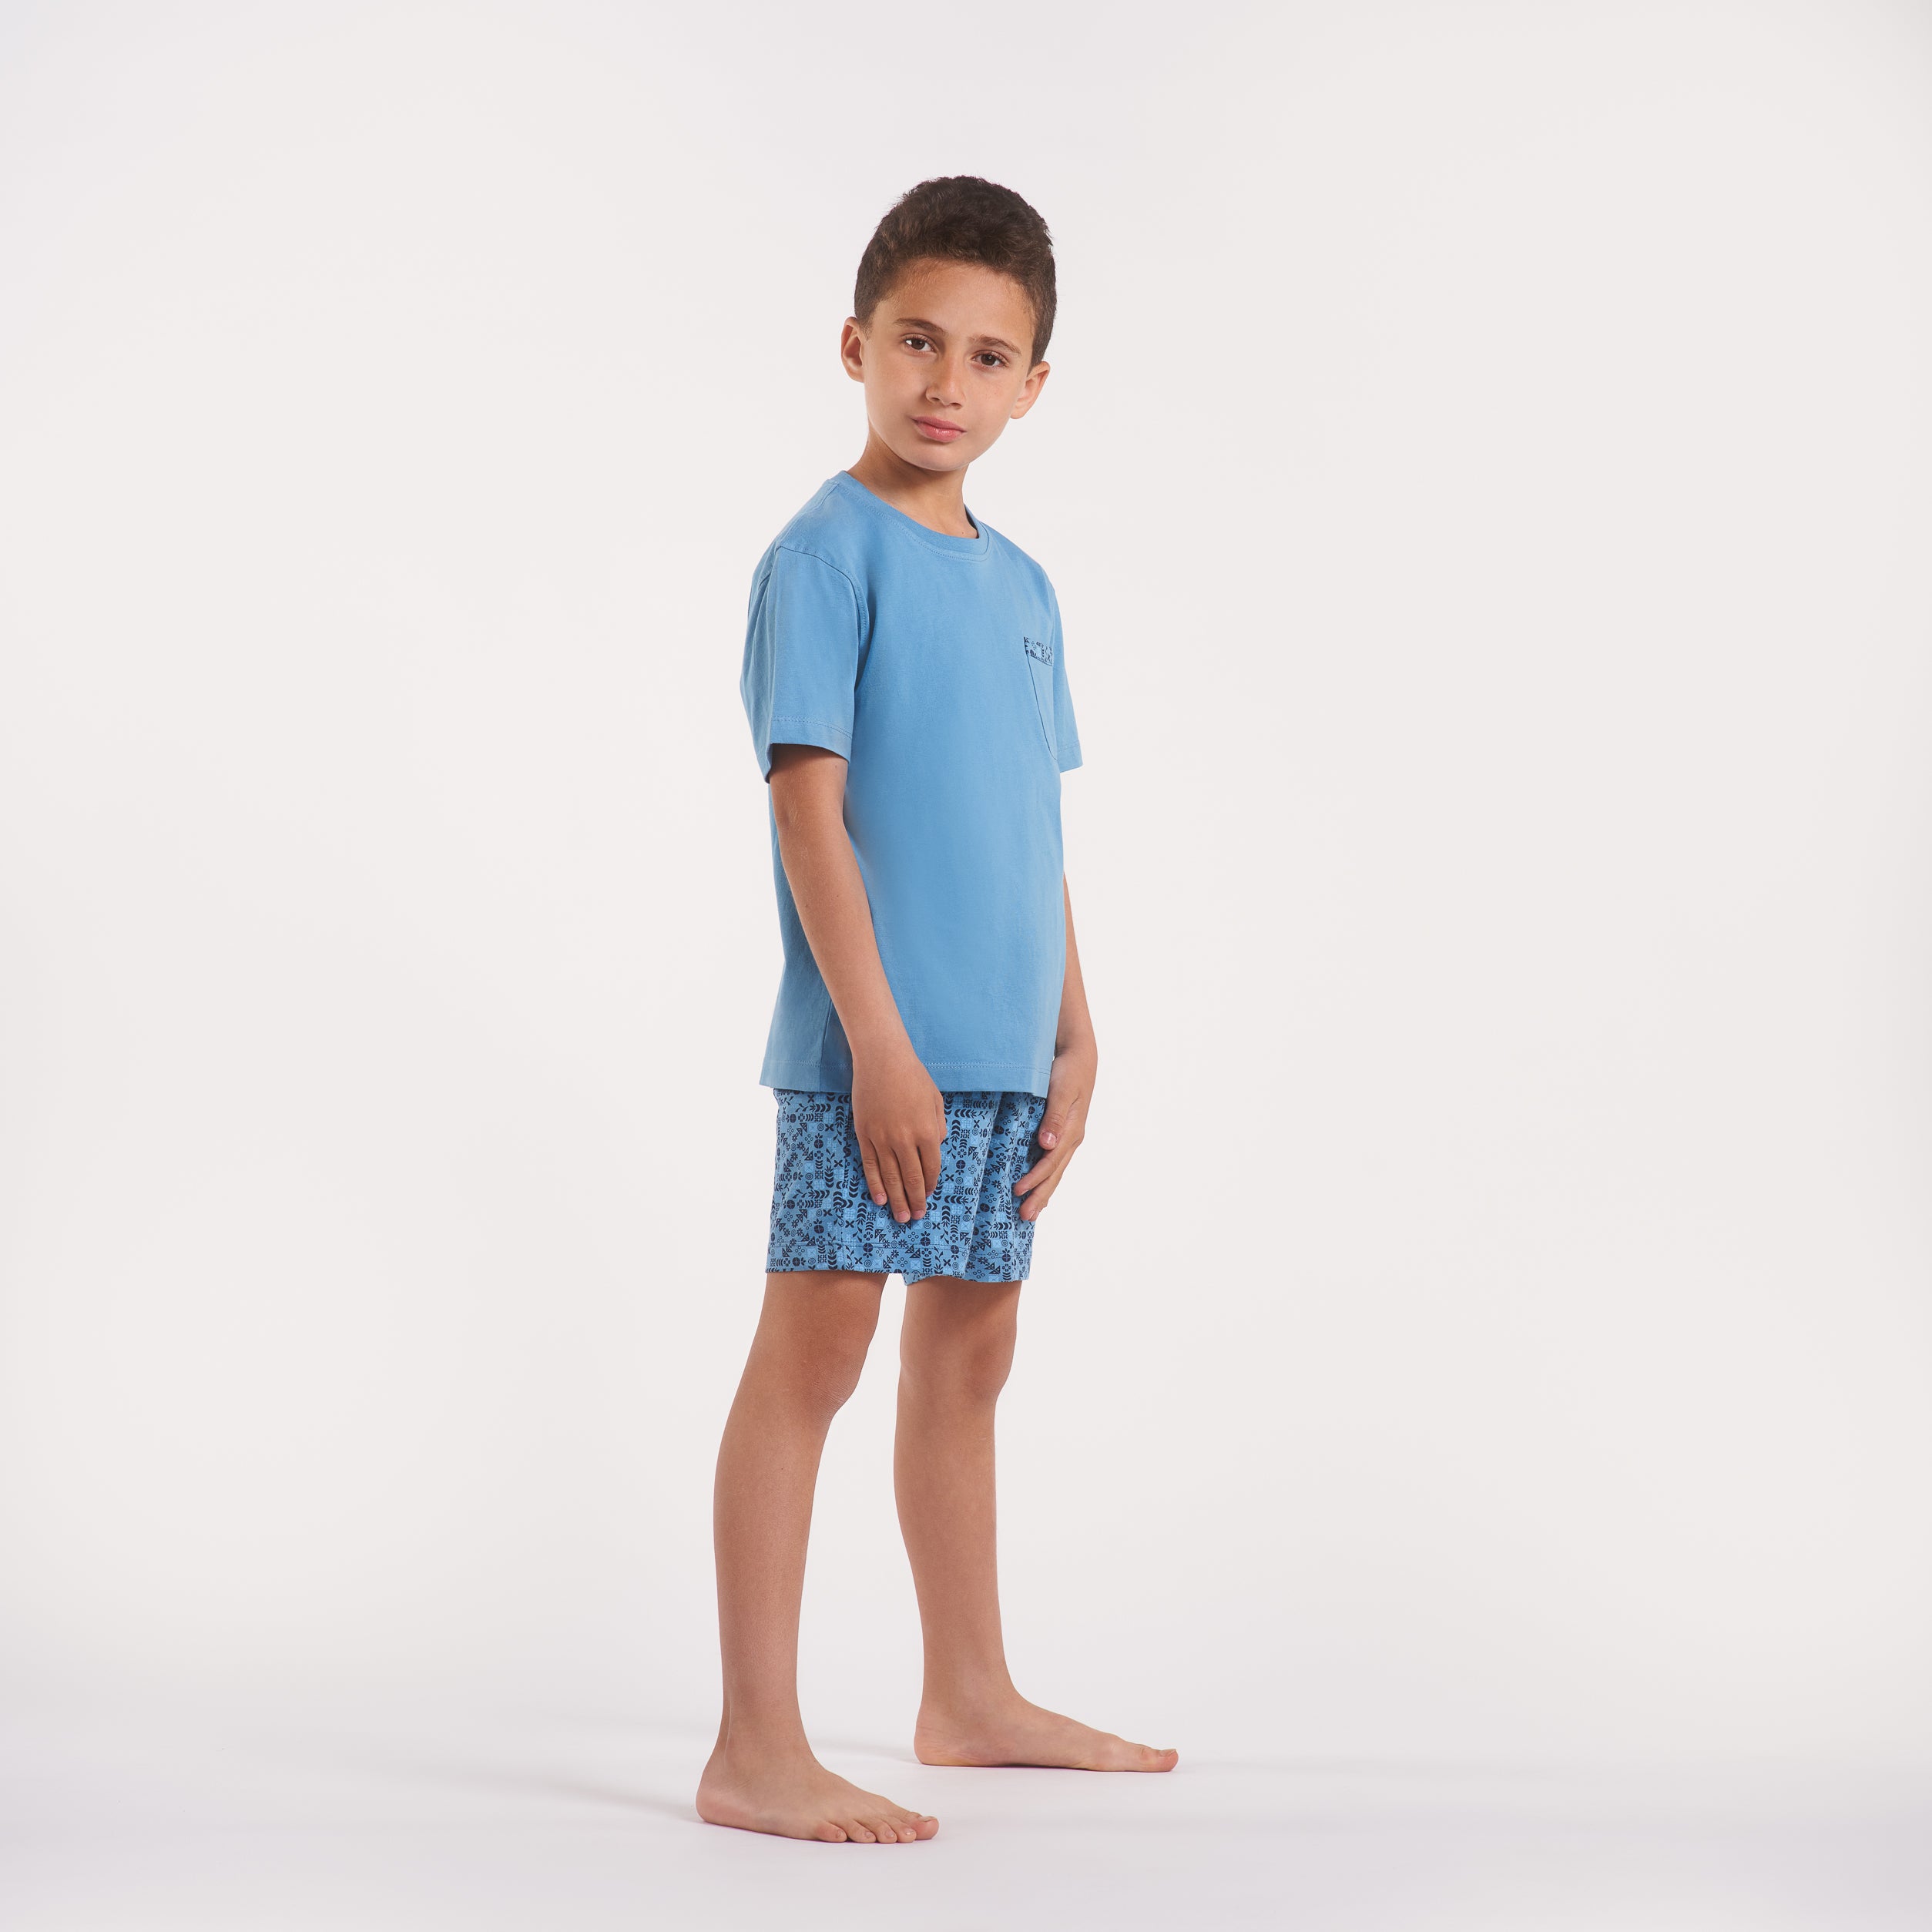 Boys Design Print  short & Solid Top Pajamas(28)